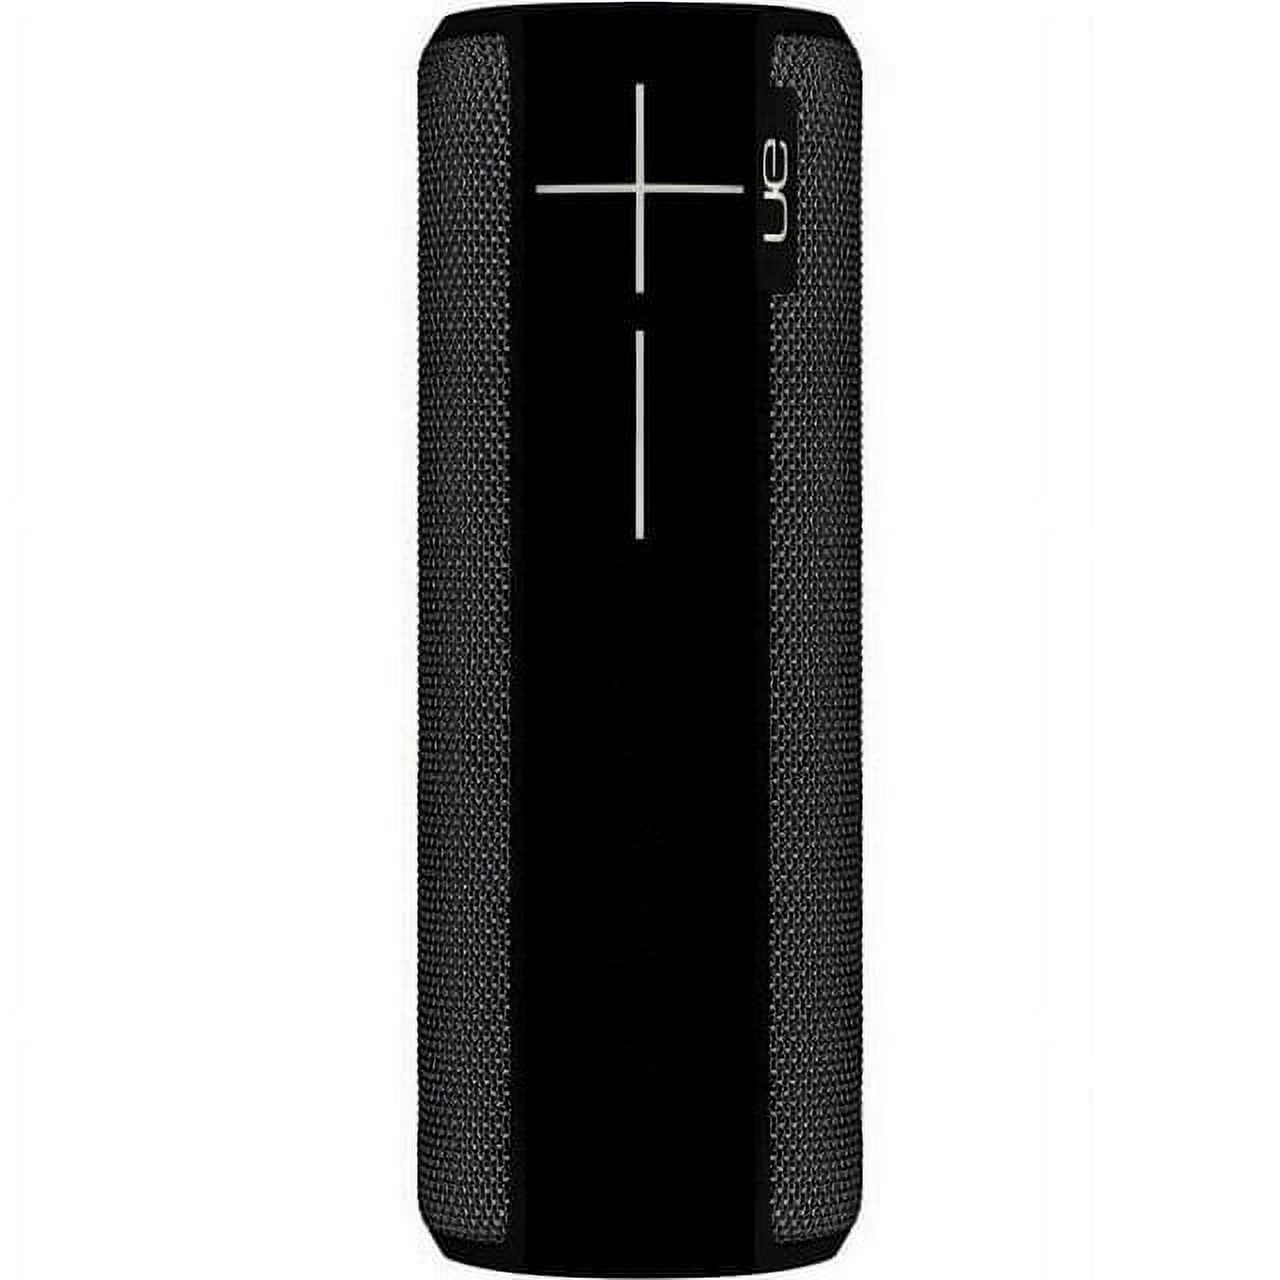 Pre-Owned Ultimate Ears Portable Bluetooth Speaker, Black, 984-000551R (Refurbished: Good) - image 1 of 2